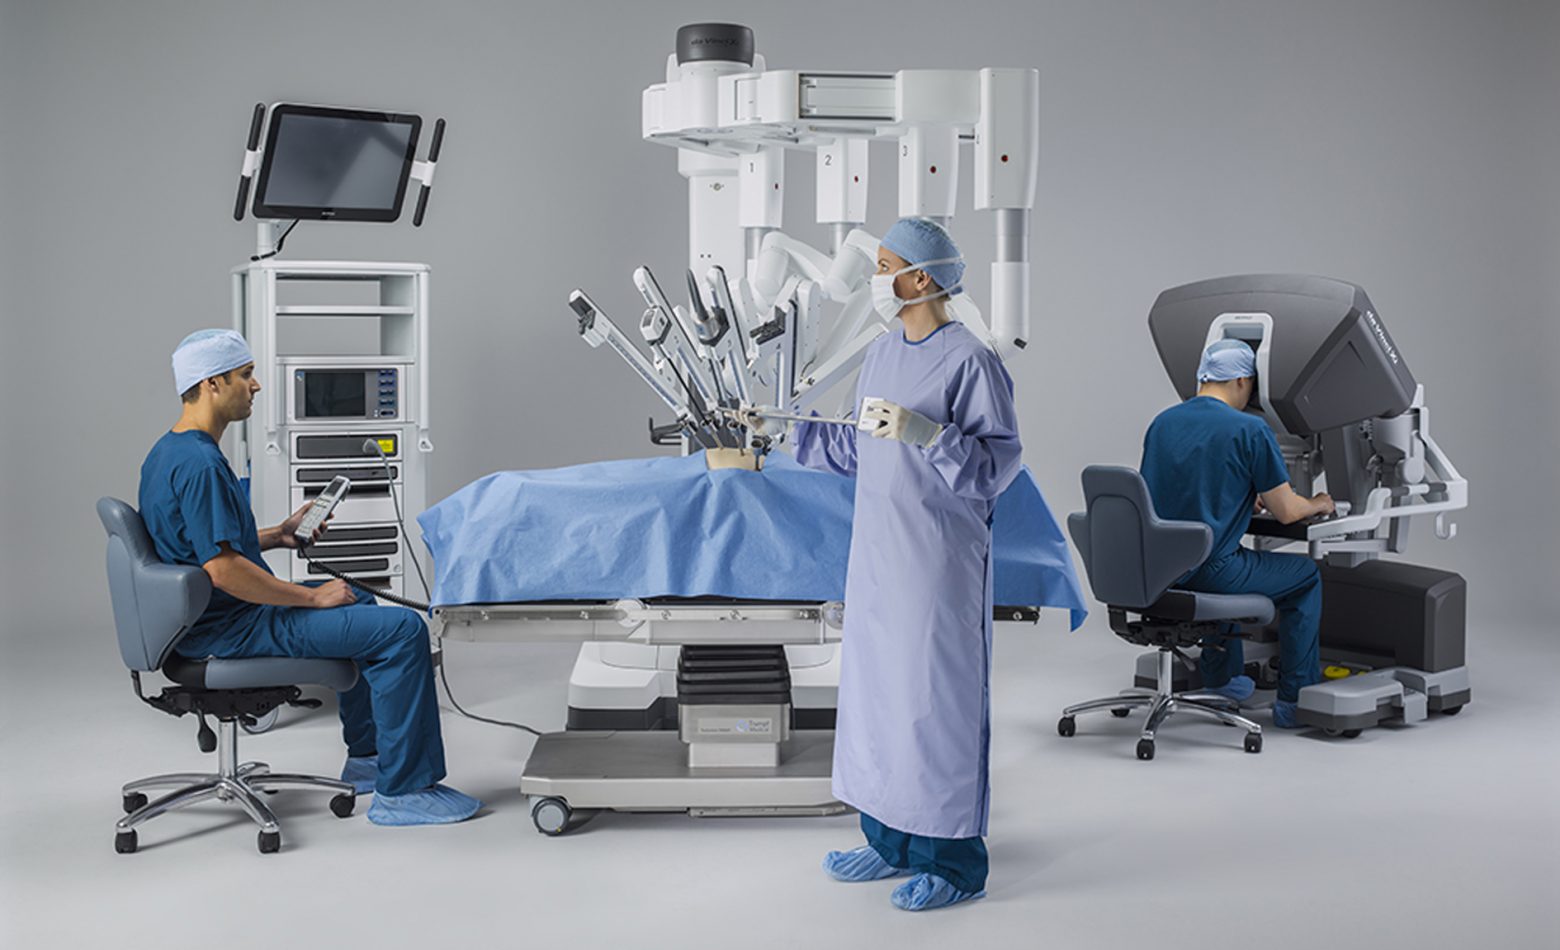 Robotic Assisted Thoracic Surgery (RATS): Η εξέλιξη της Ρομποτικής Θωρακοχειρουργικής στην υπηρεσία του ασθενούς